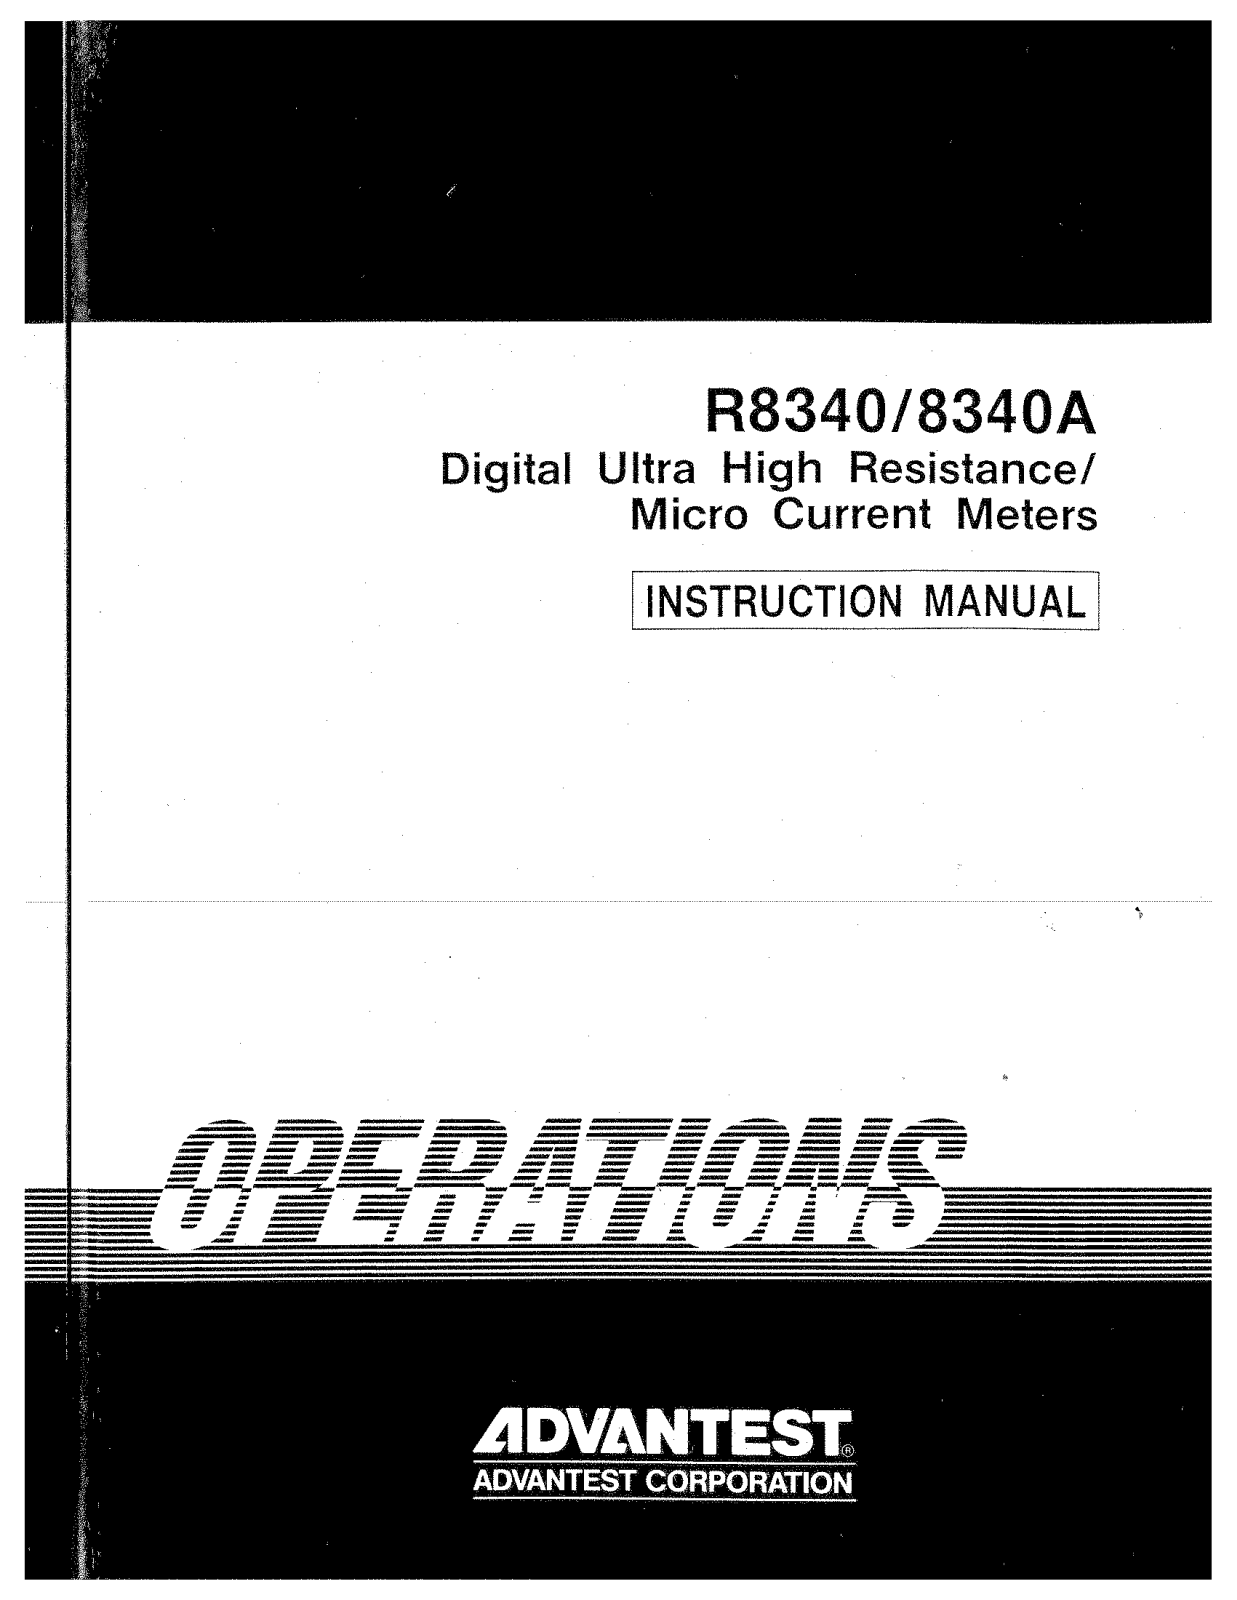 Advantest Corporation R8340A, R8340 Instruction Manual